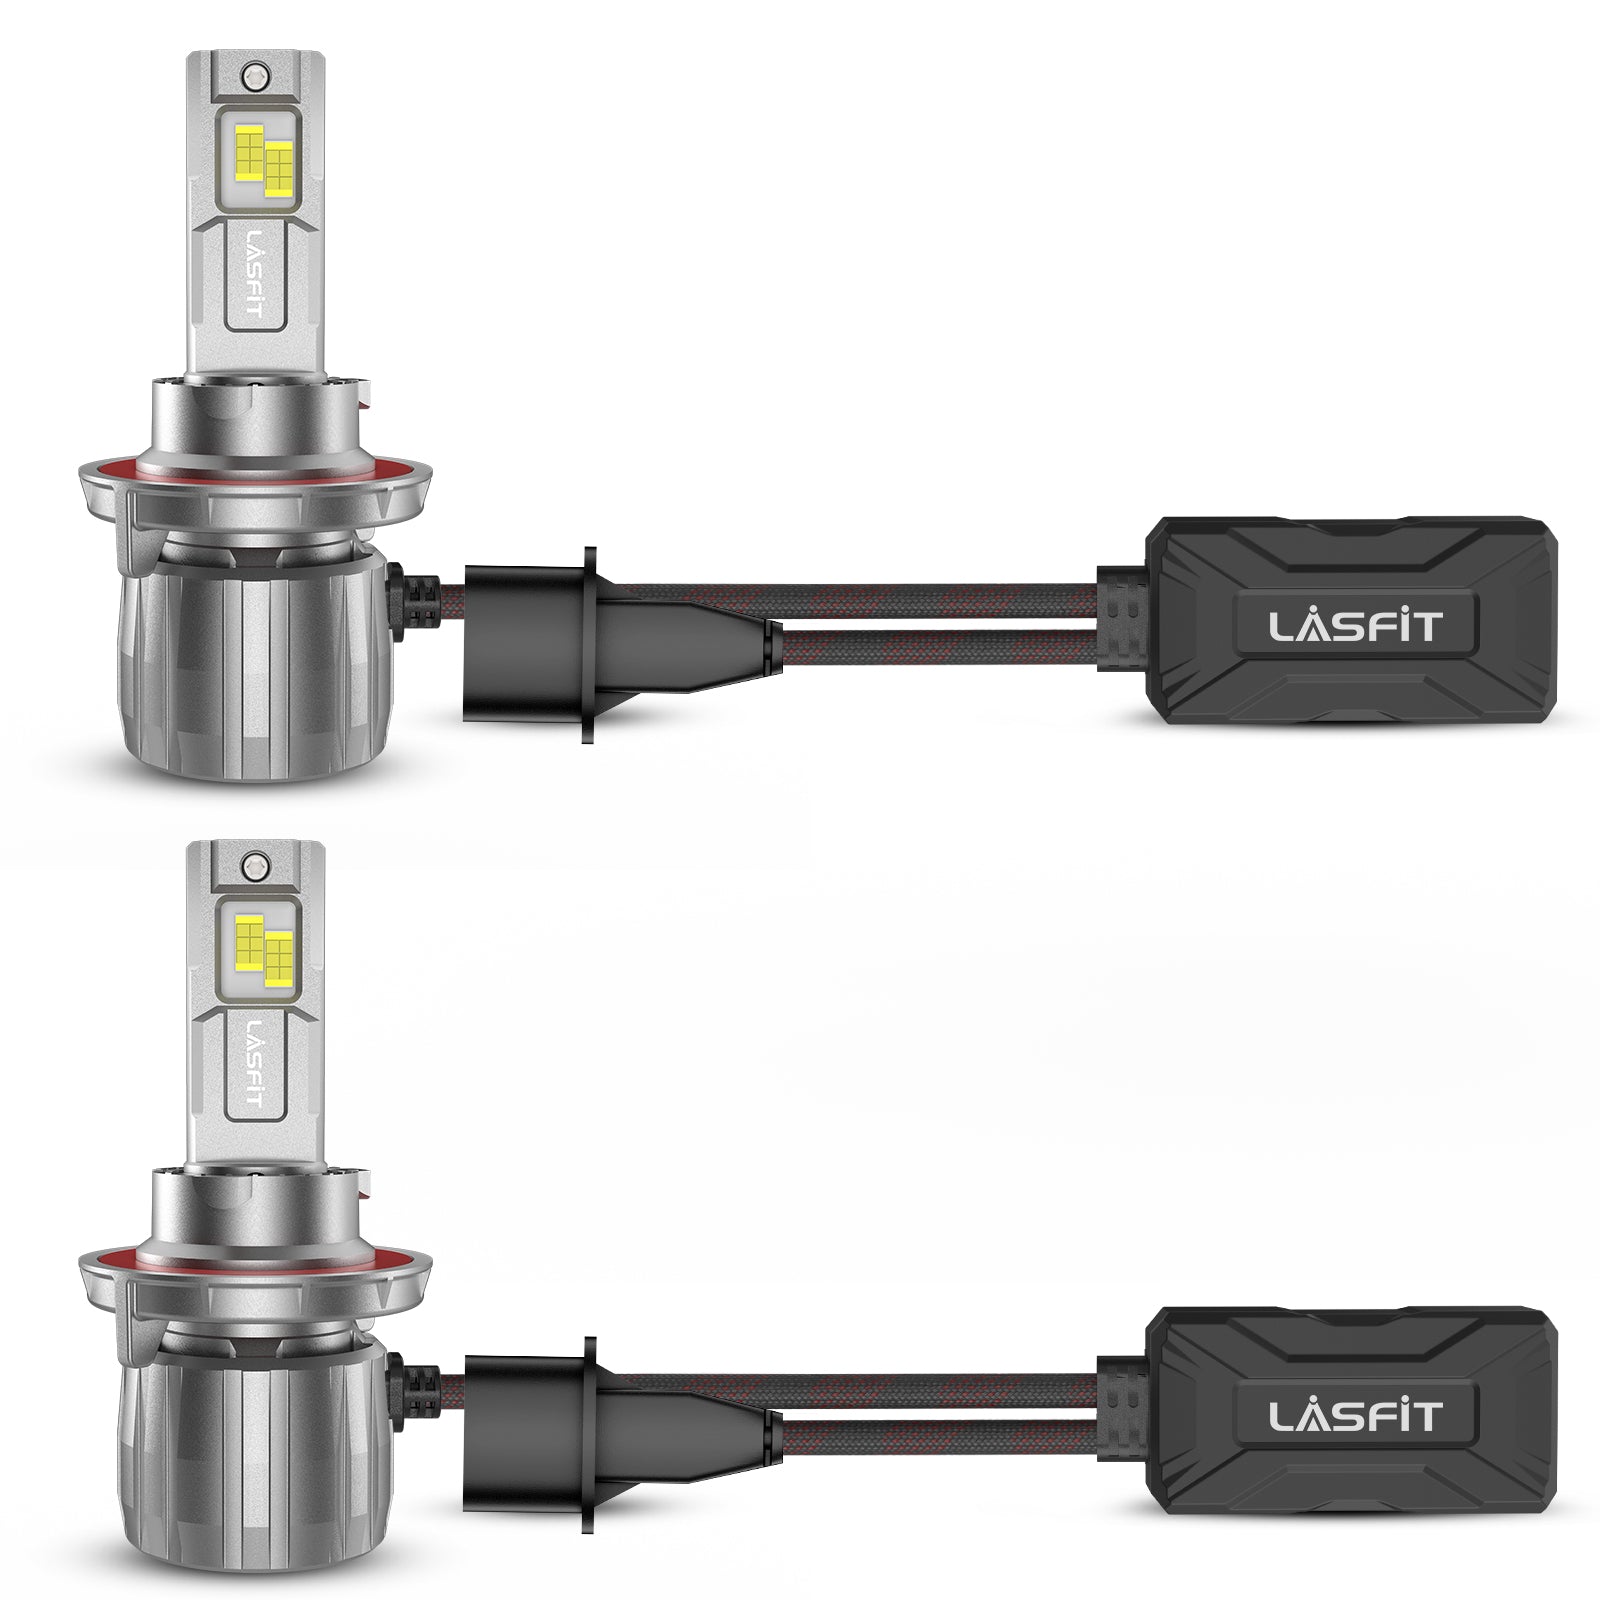 9005/HB3 LED Headlight Bulbs N40 Series 100W 20000LM 6000K IP67